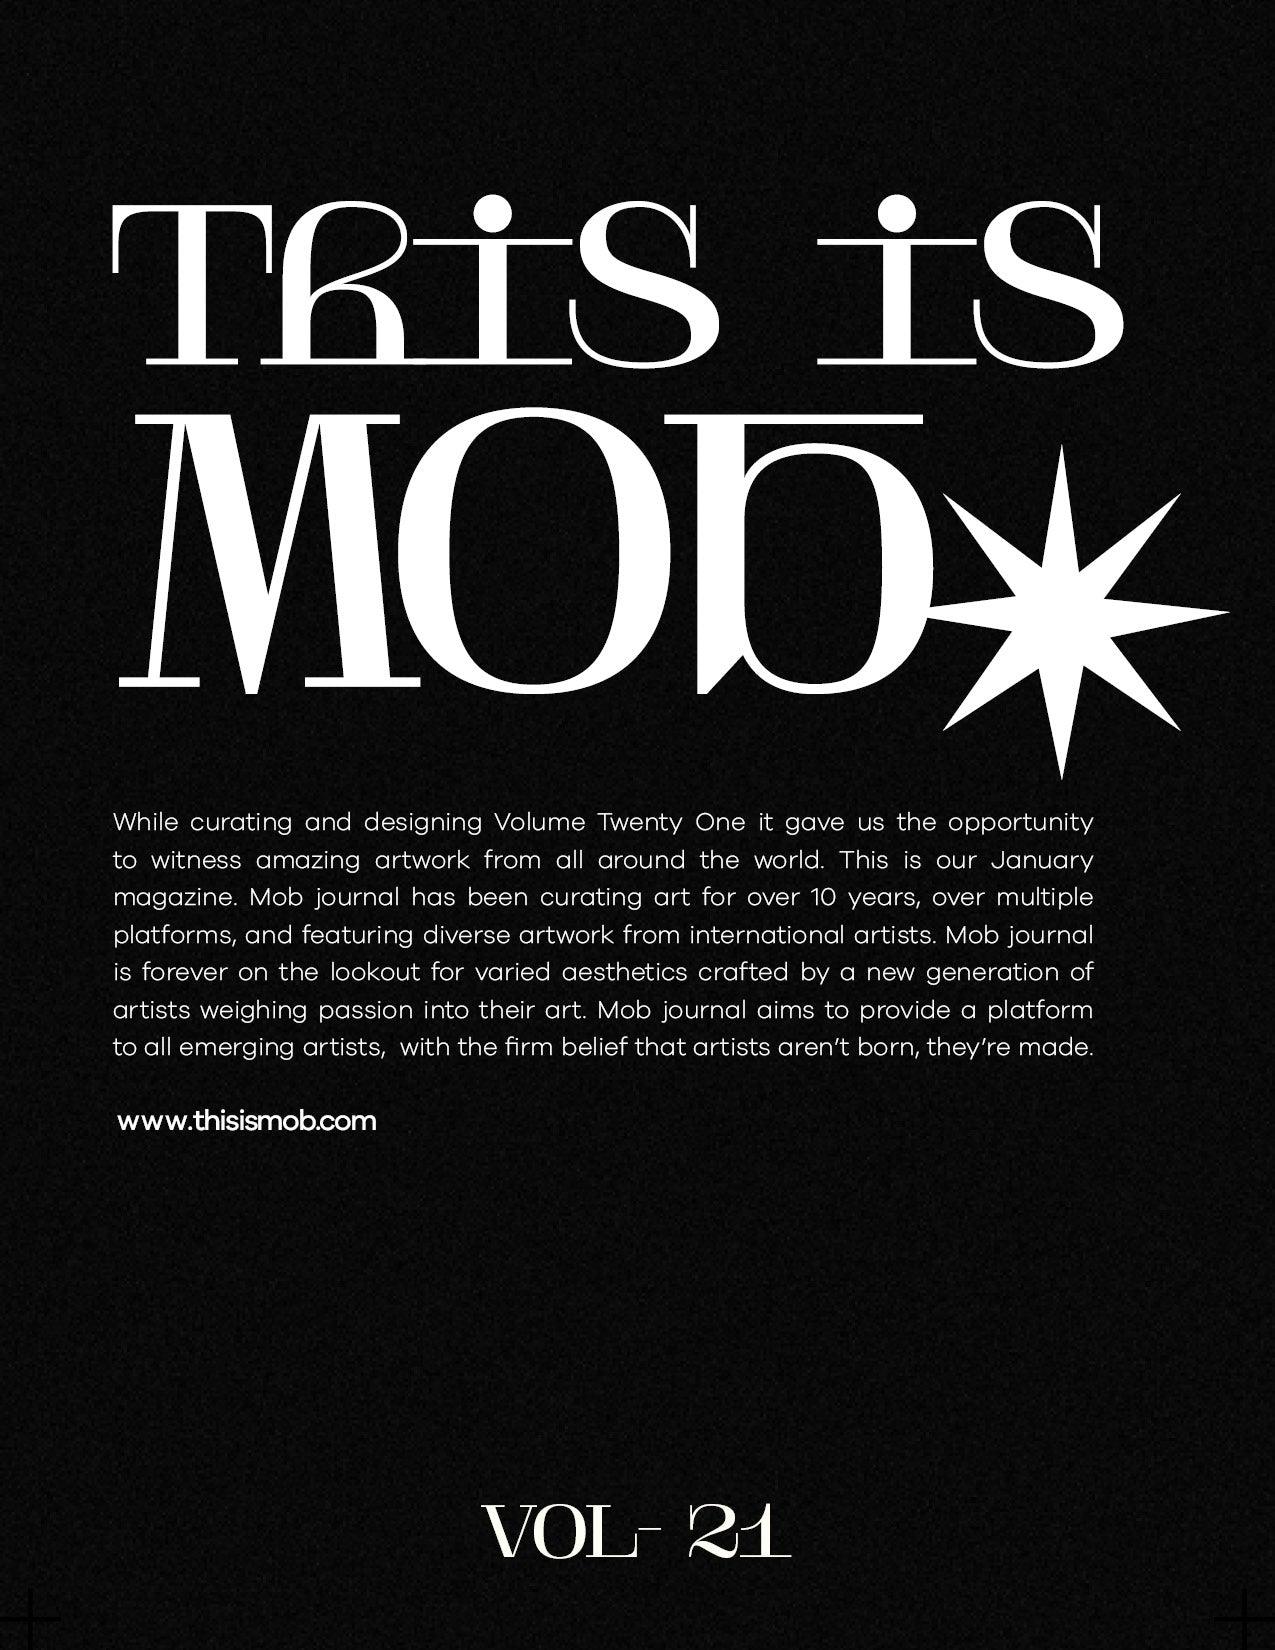 MOB JOURNAL | VOLUME TWENTY ONE | ISSUE #19 - Mob Journal